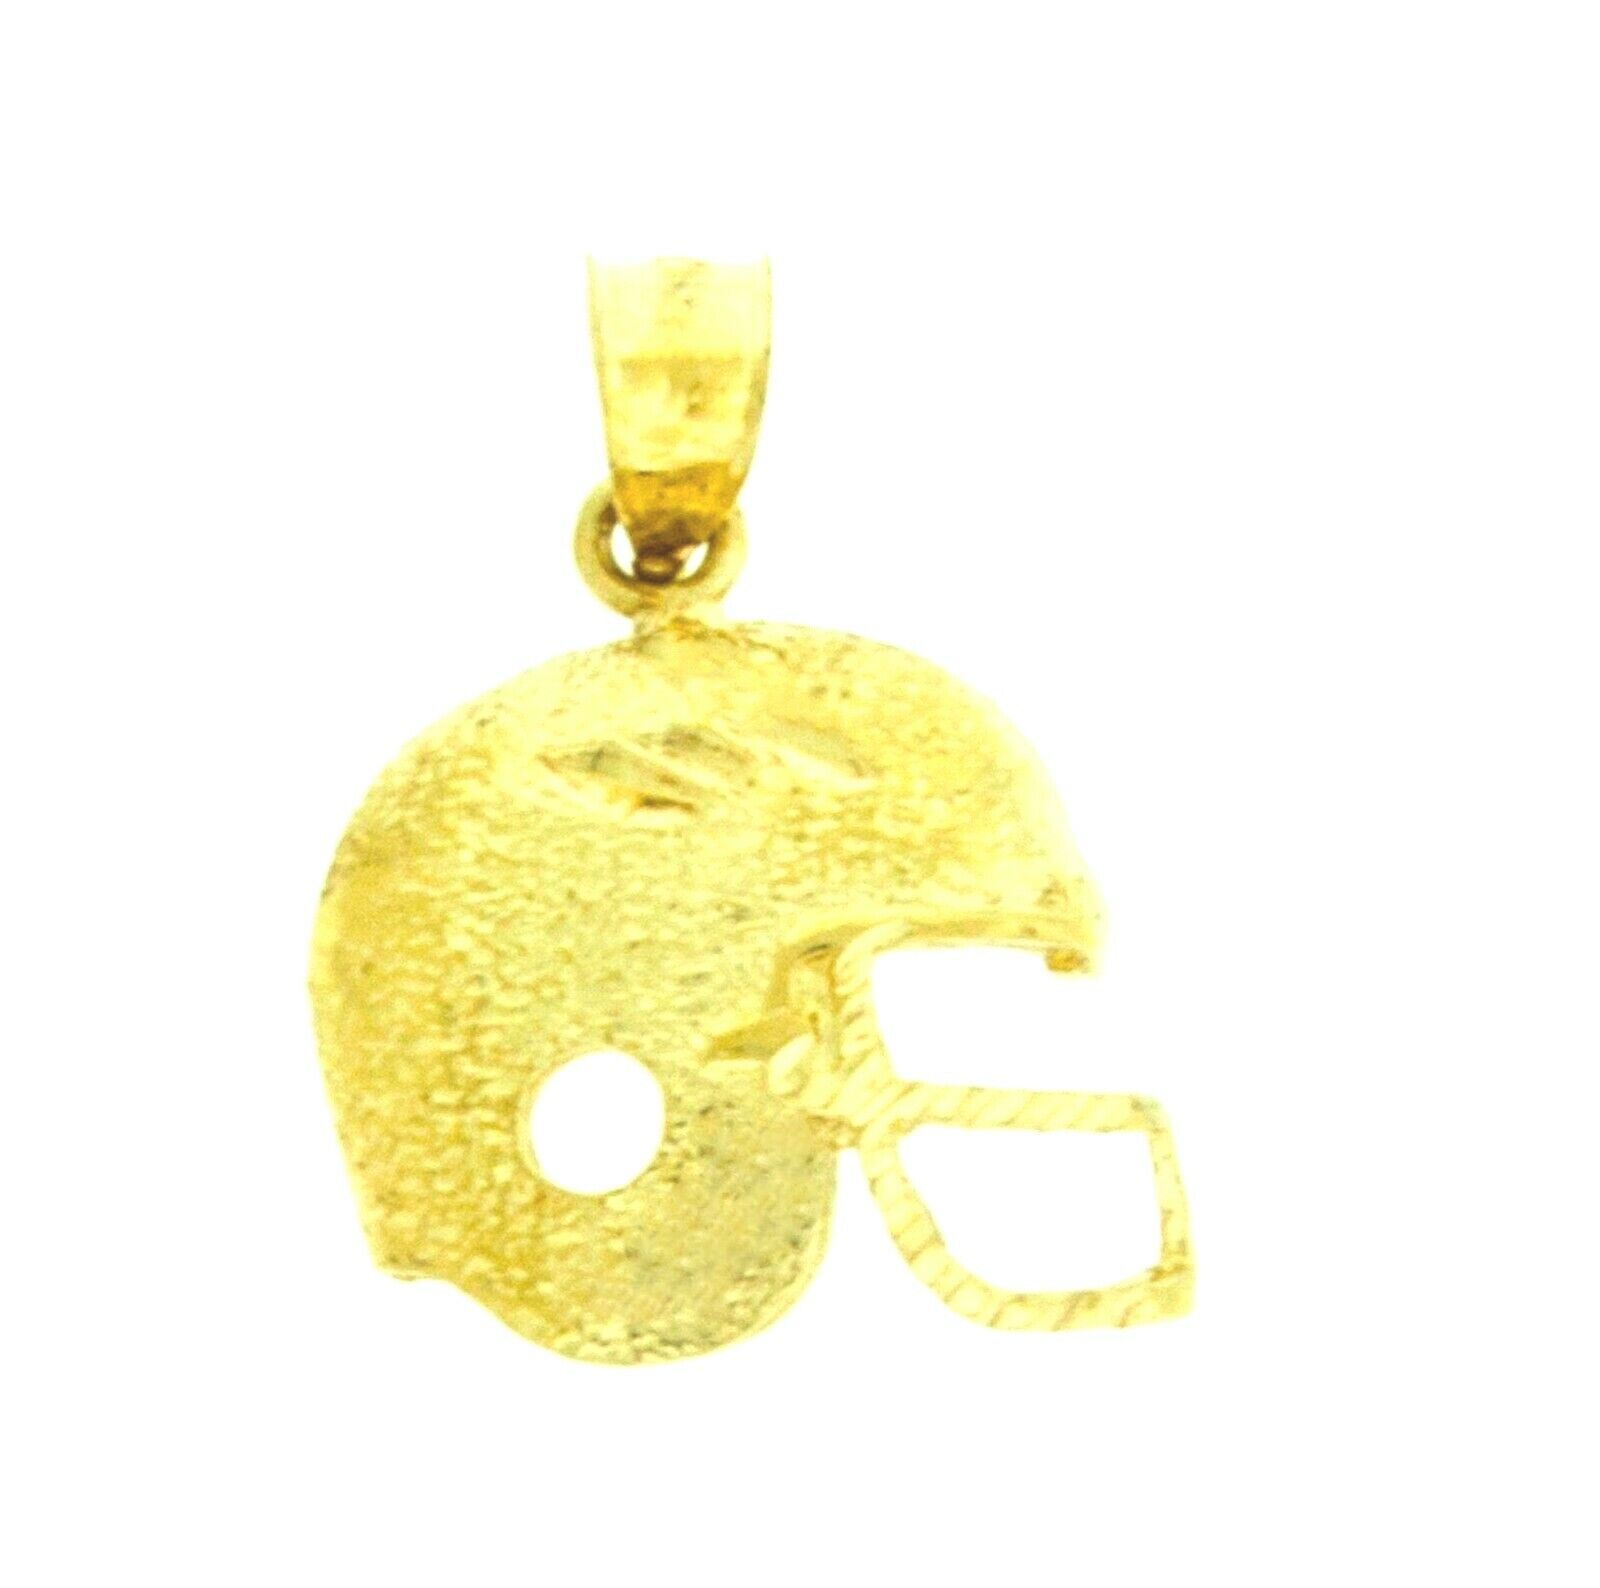 Football Helmet 14k Solid Yellow Gold New Pendant Necklace Charm .84 Inches Long Niska cena, popularna wyprzedaż